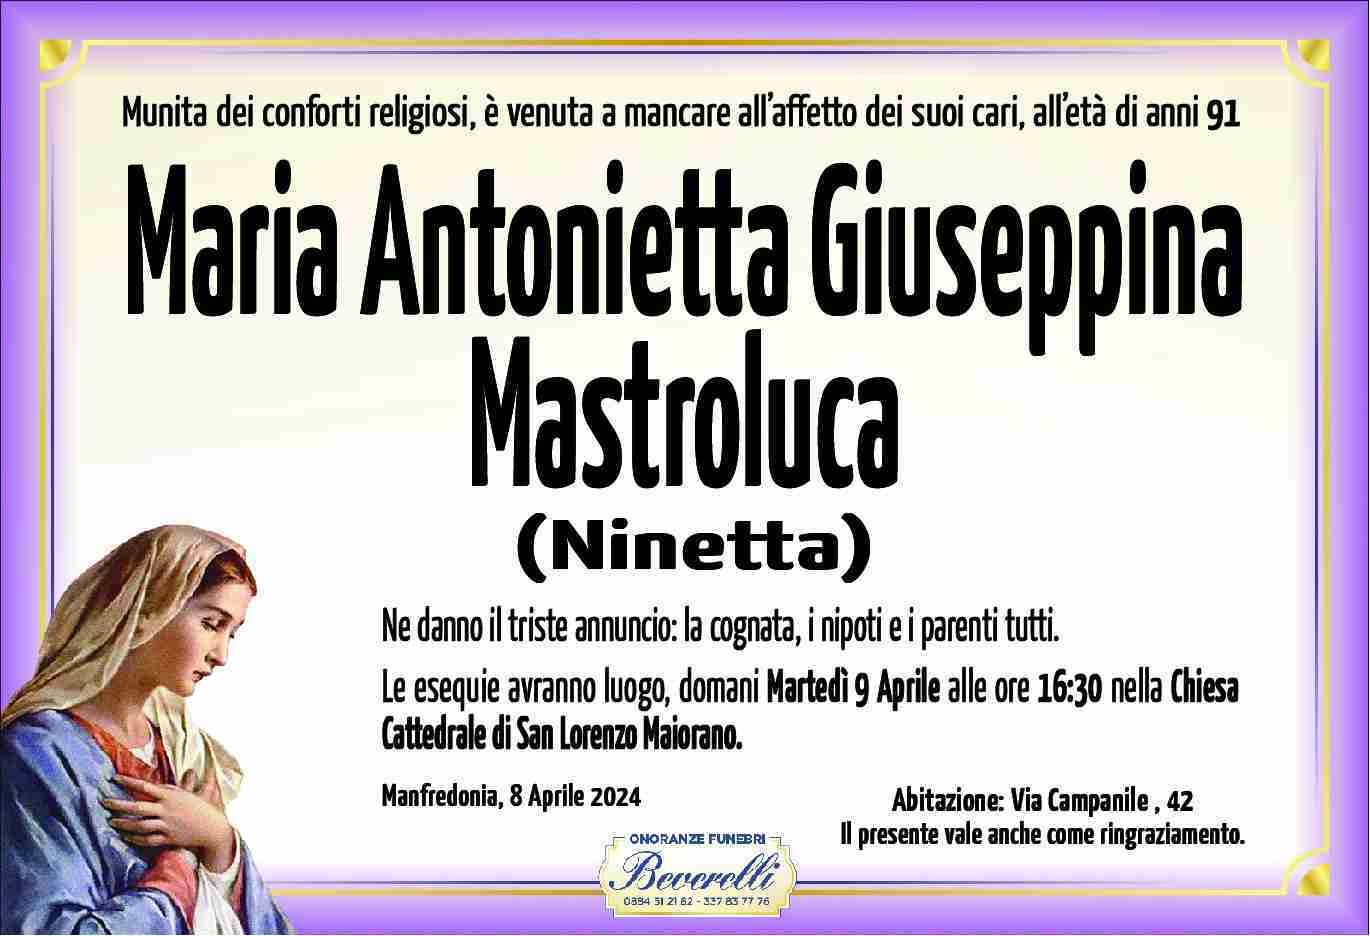 Maria Antonietta Giuseppina Mastroluca